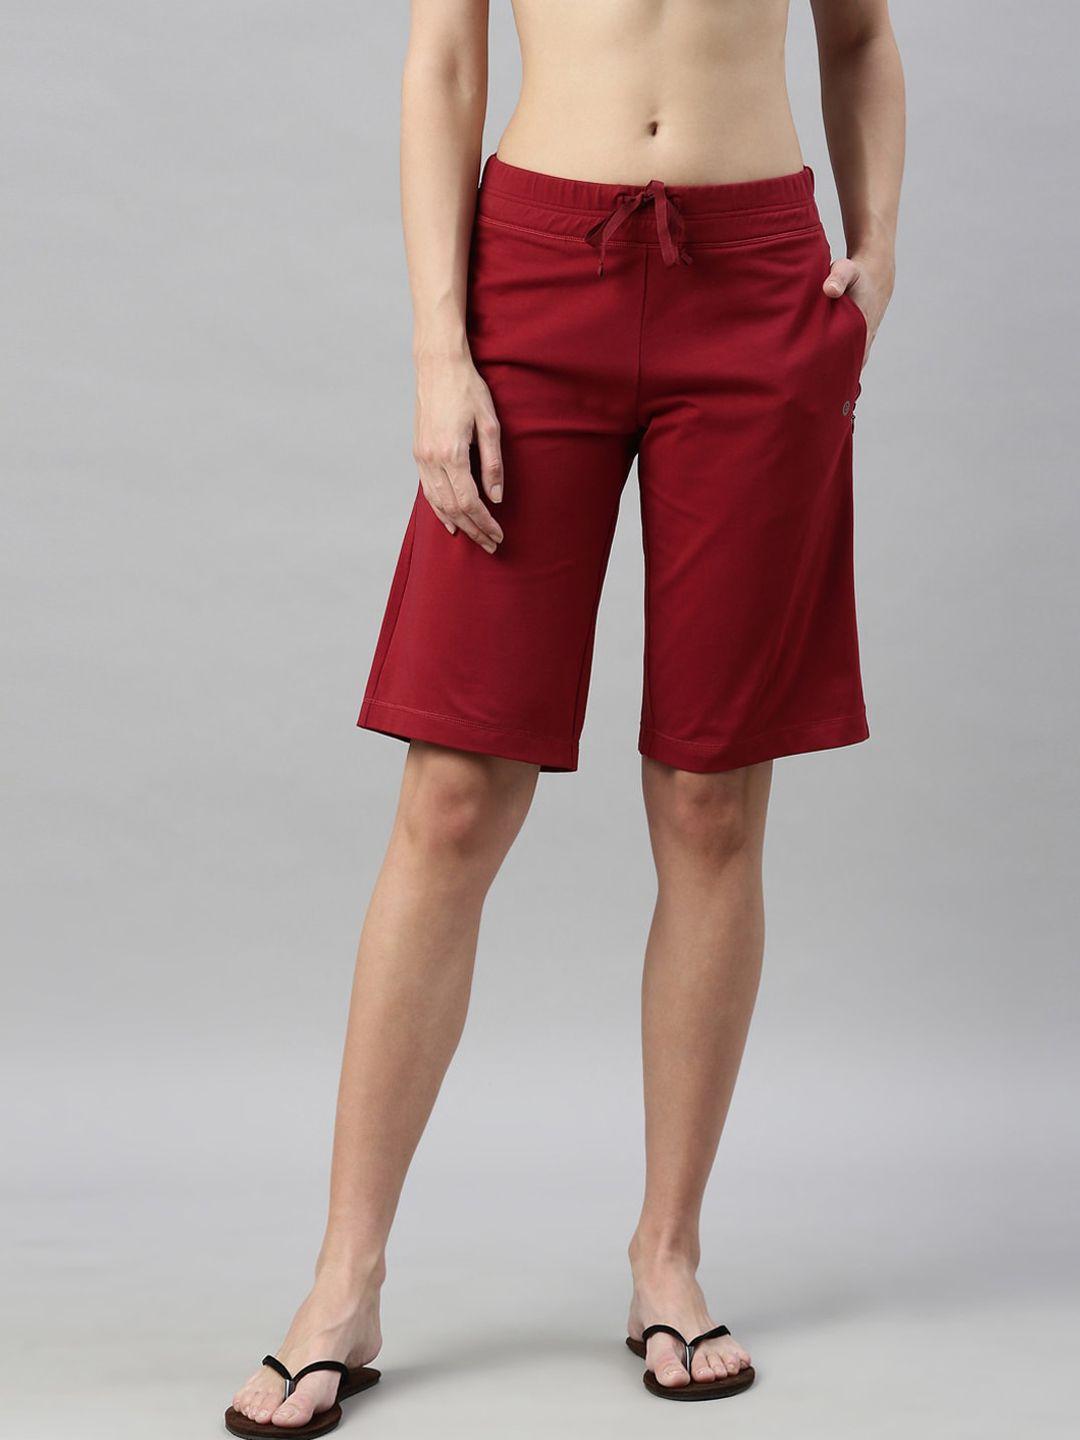 enamor women mid-rise stretch cotton city shorts with zipper pockets e044